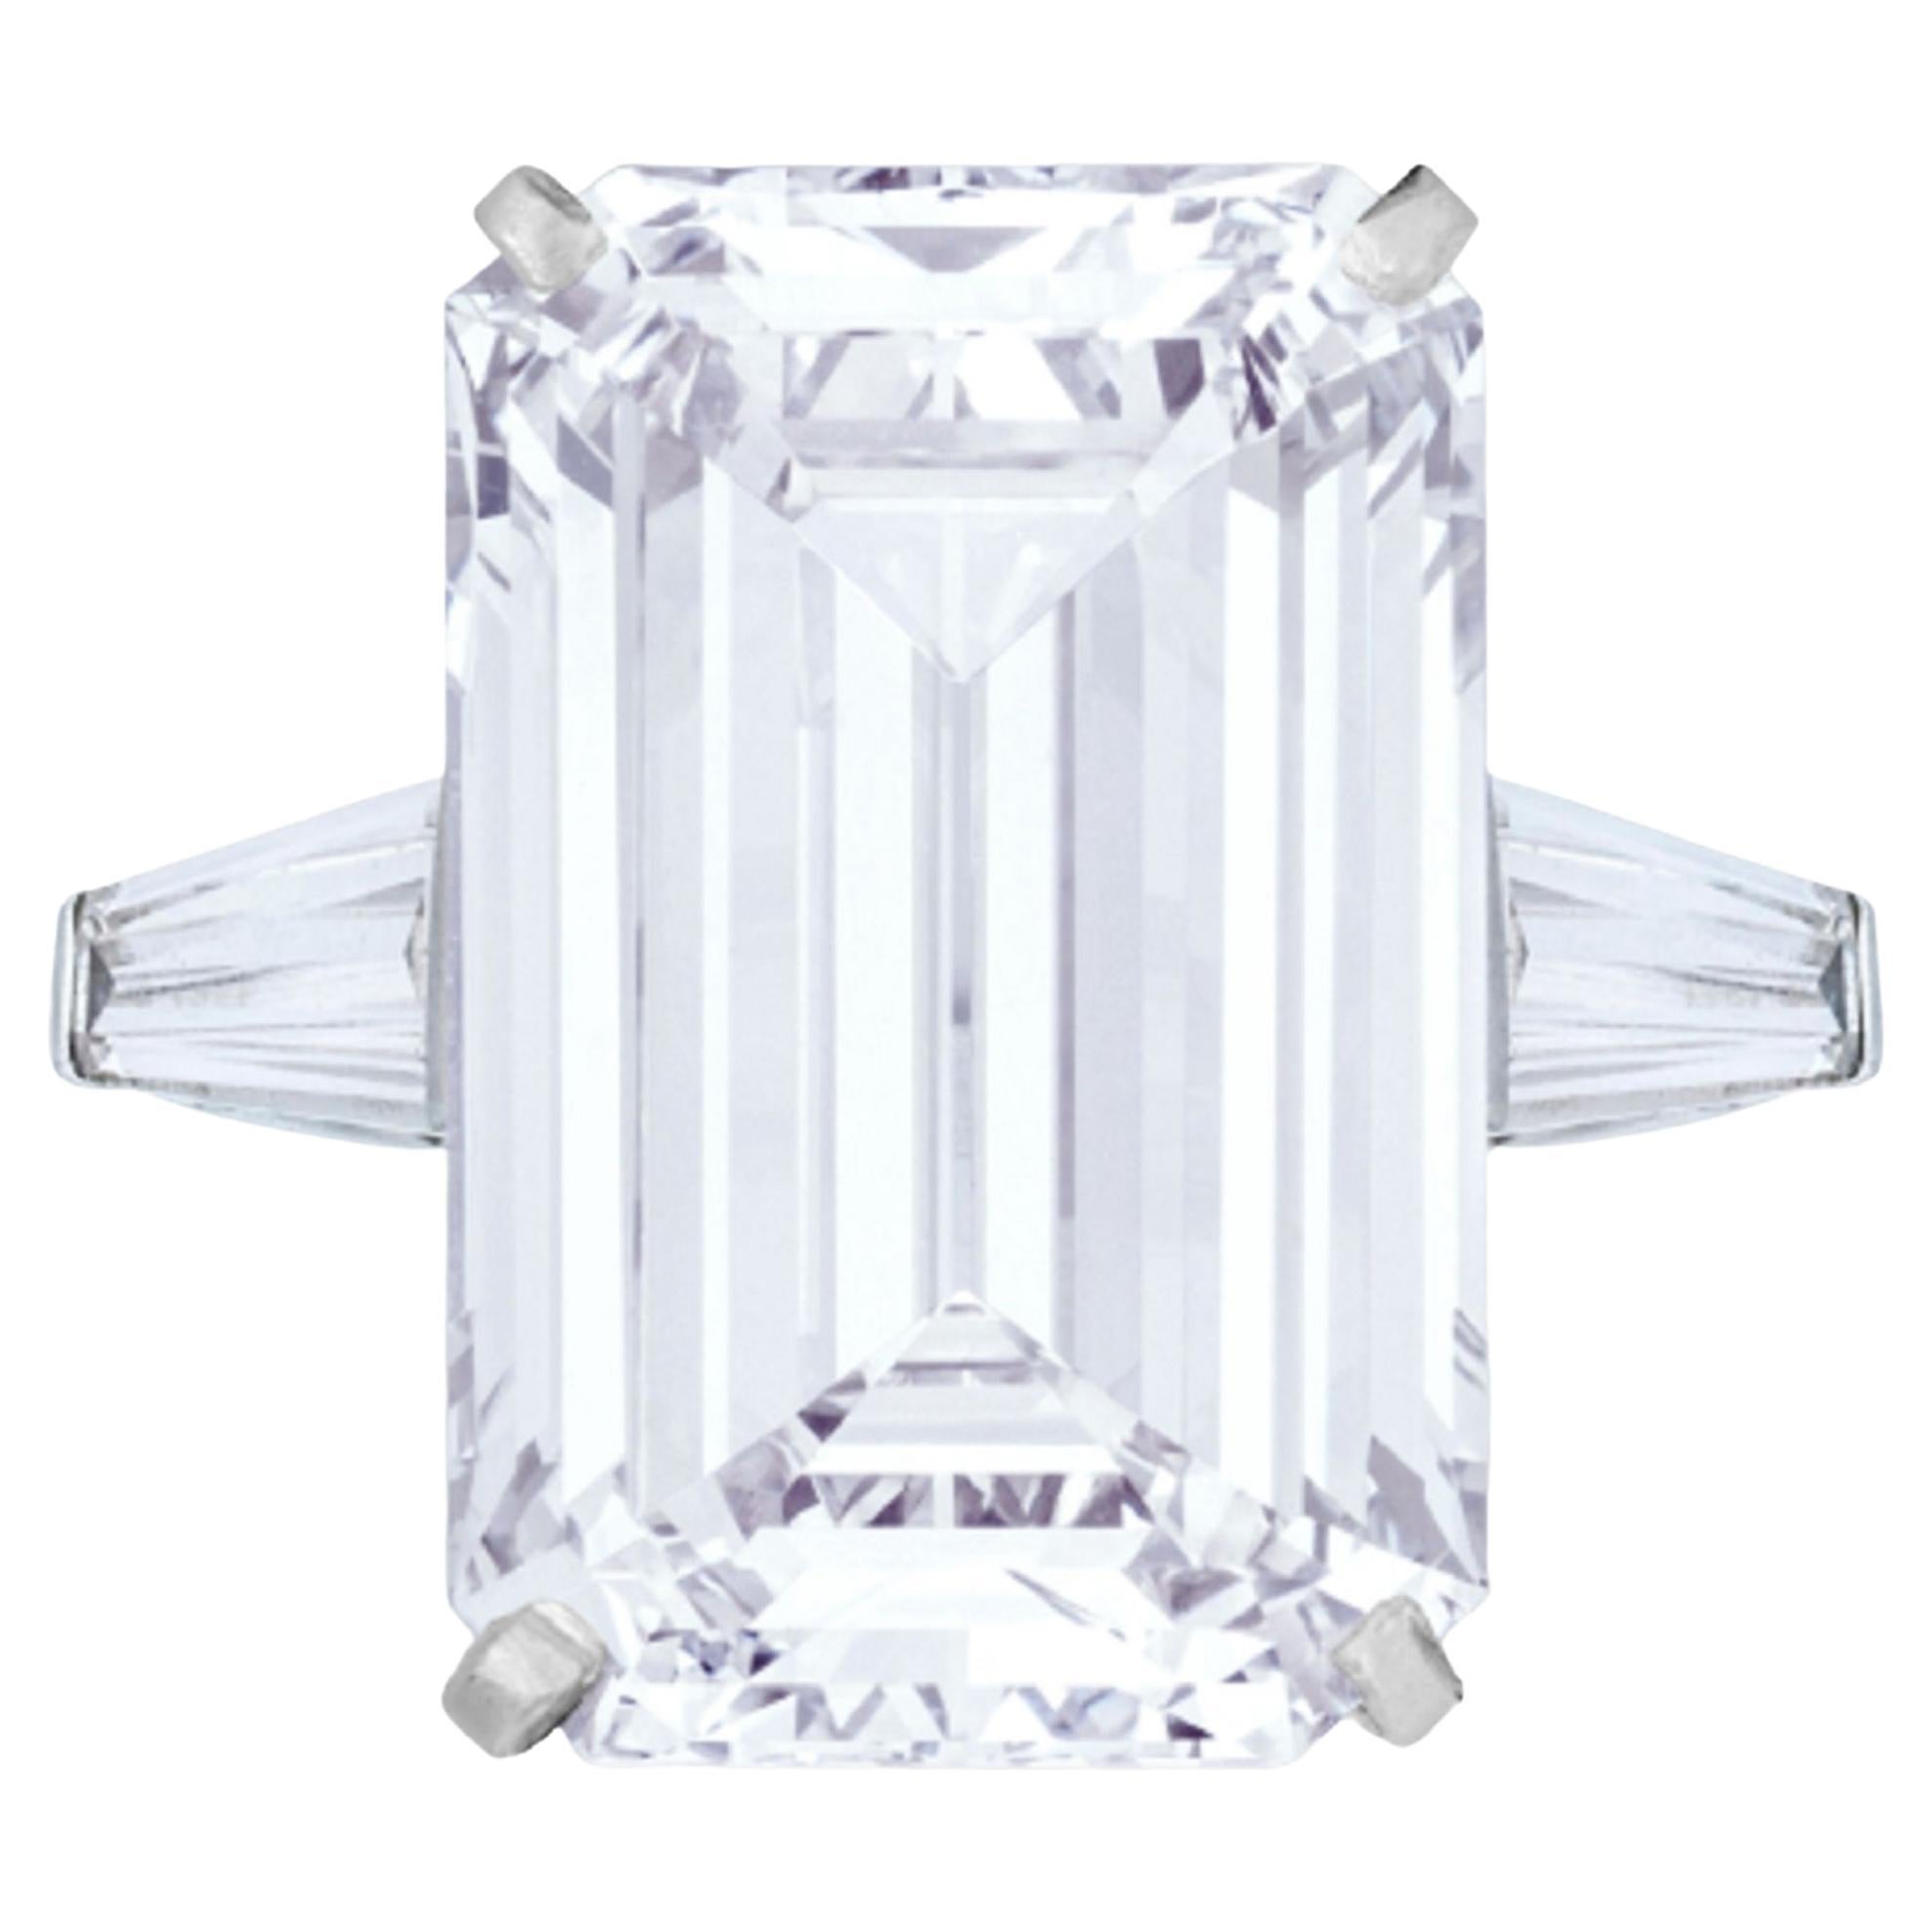 Flawless E Color GIA Certified 4.12 Carat Emerald Cut Diamond